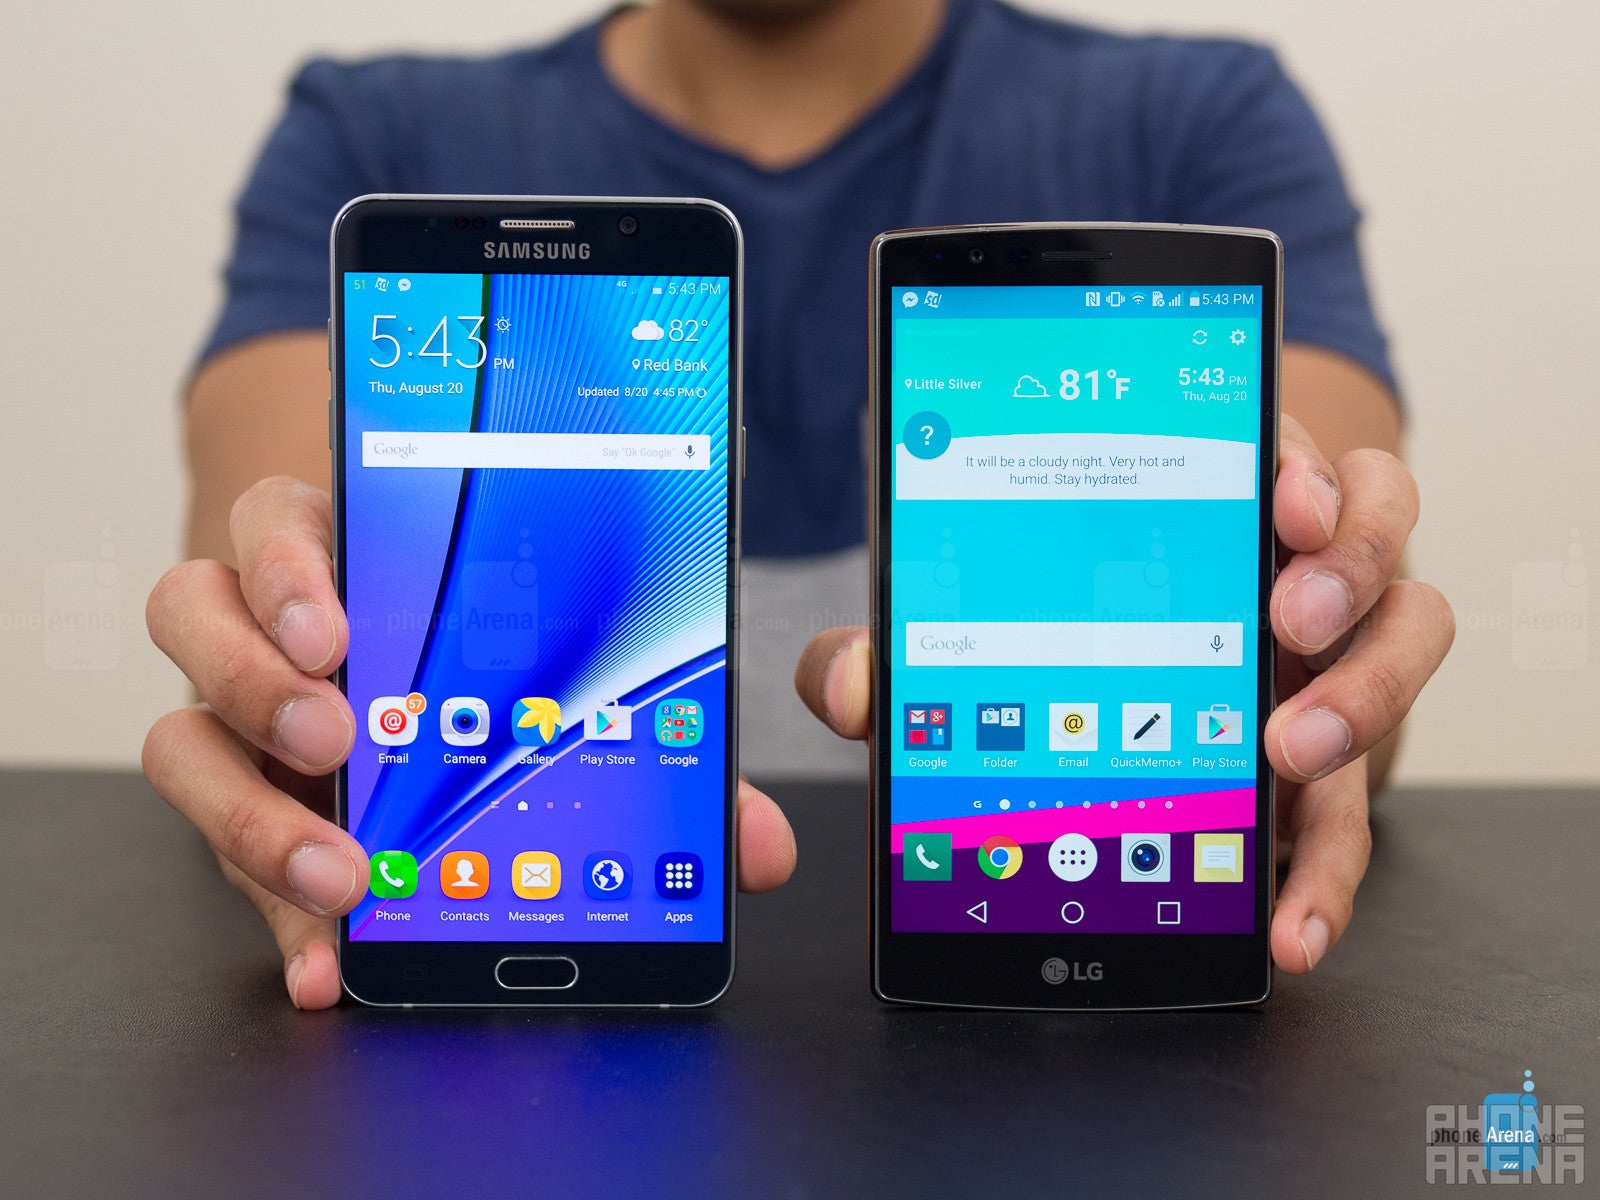 Samsung Galaxy Note5 vs LG G4